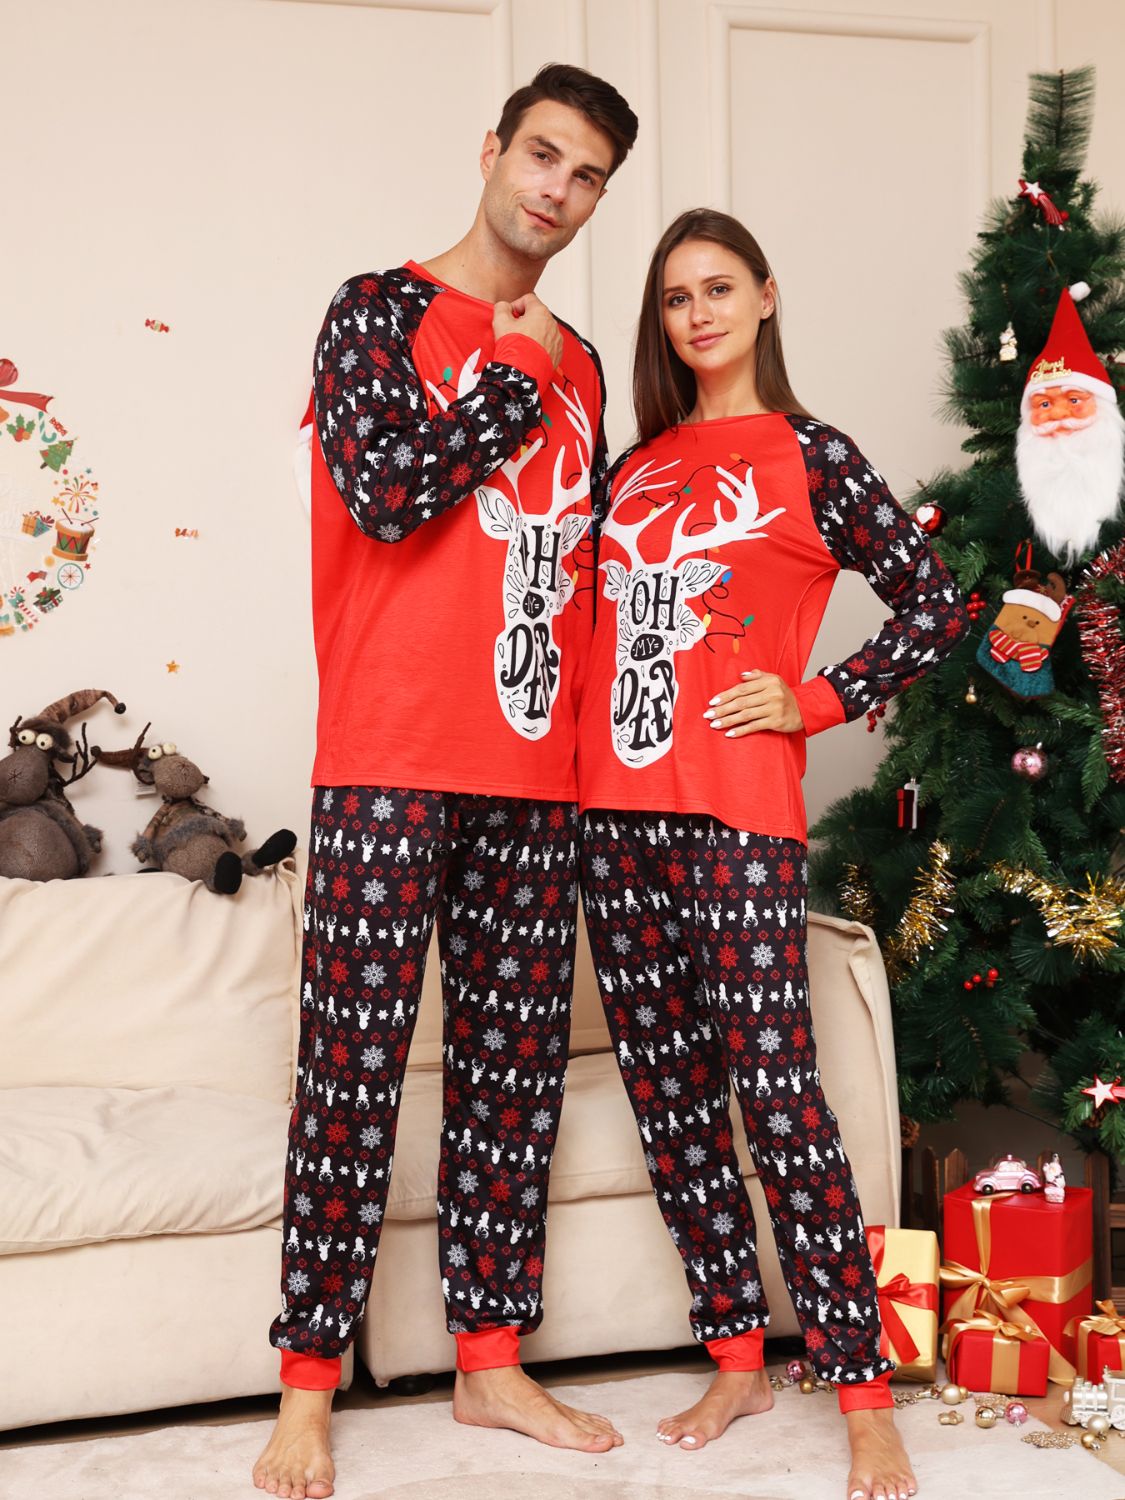 Woman's Full Size Reindeer Christmas Family Pajama Top and Pants Set